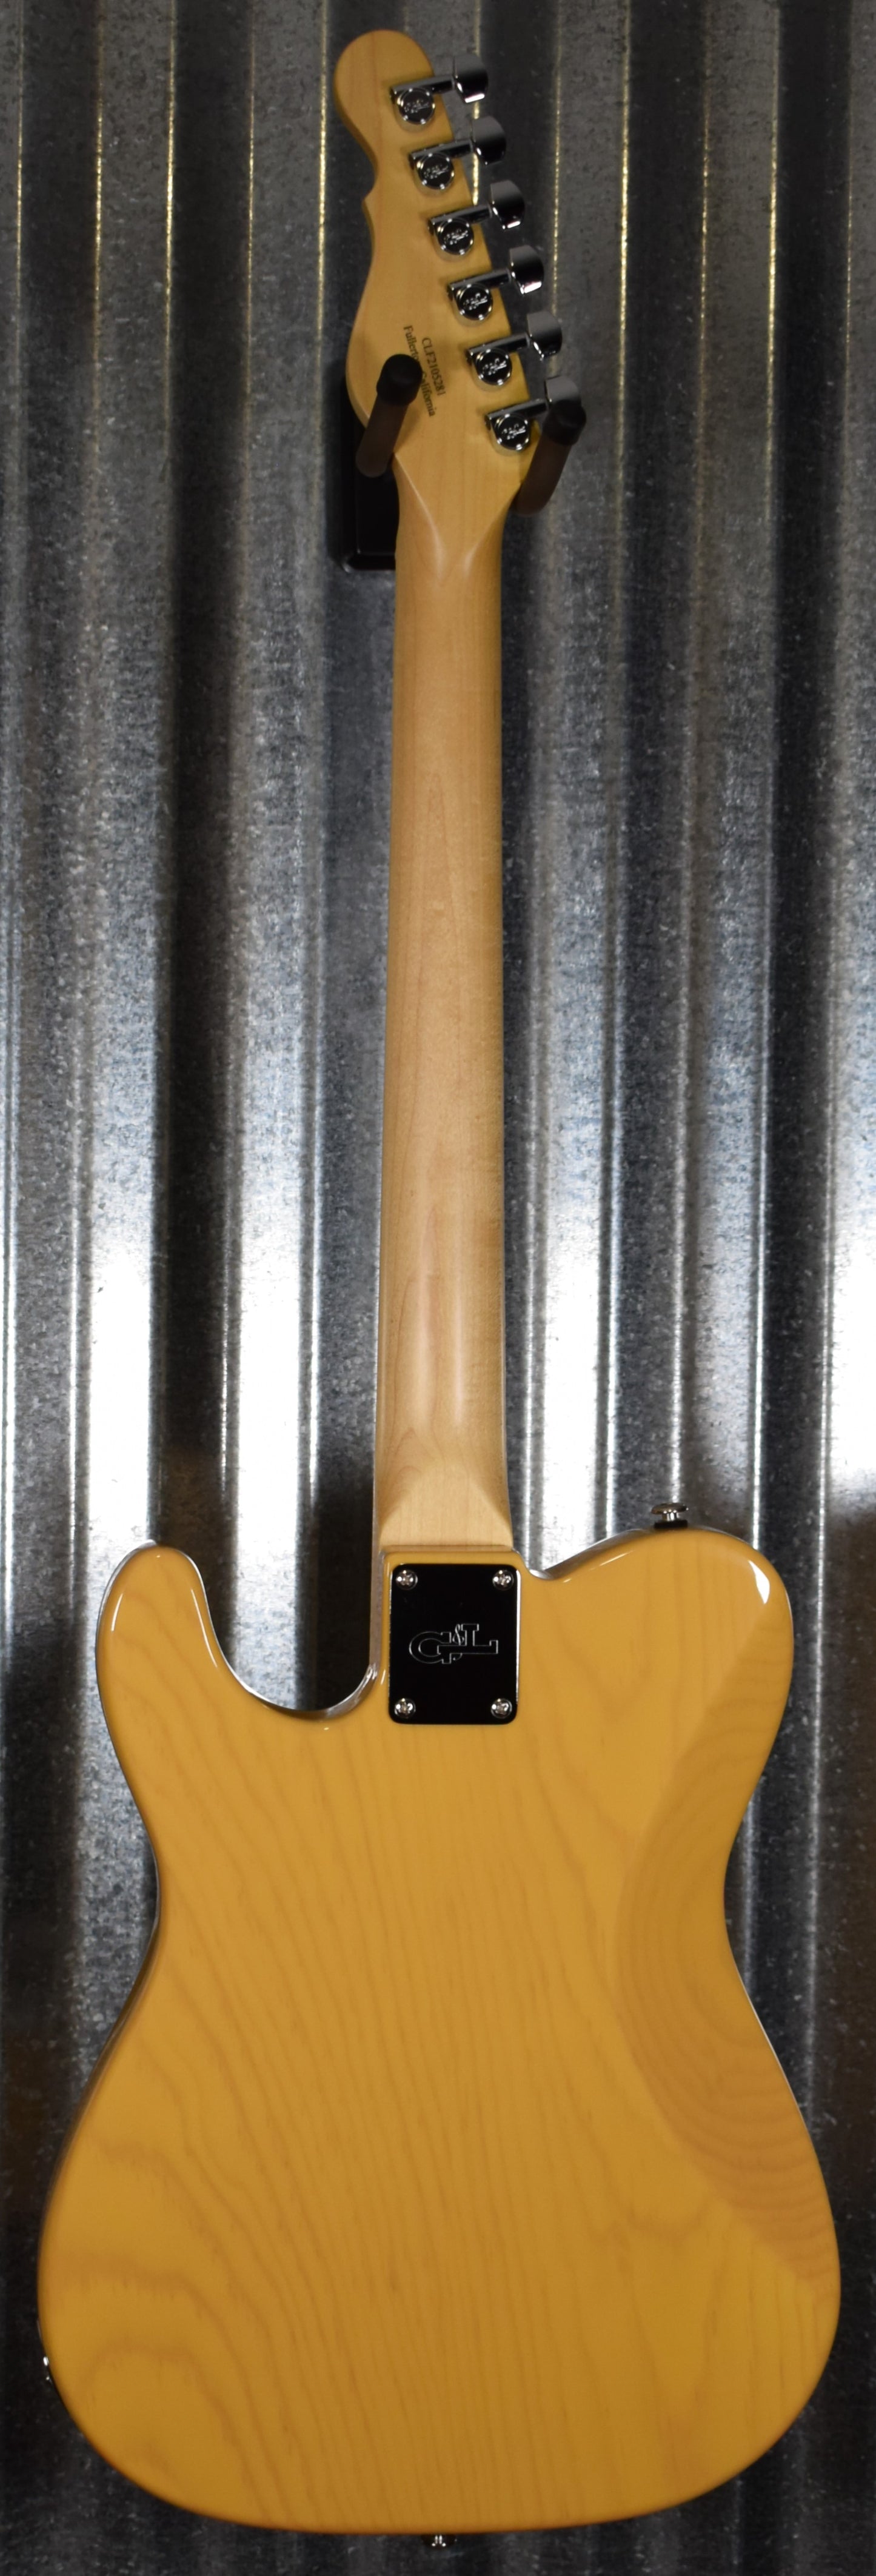 G&L USA  ASAT Special Butterscotch Blonde Pine Maple Satin Neck Guitar & Case #5281